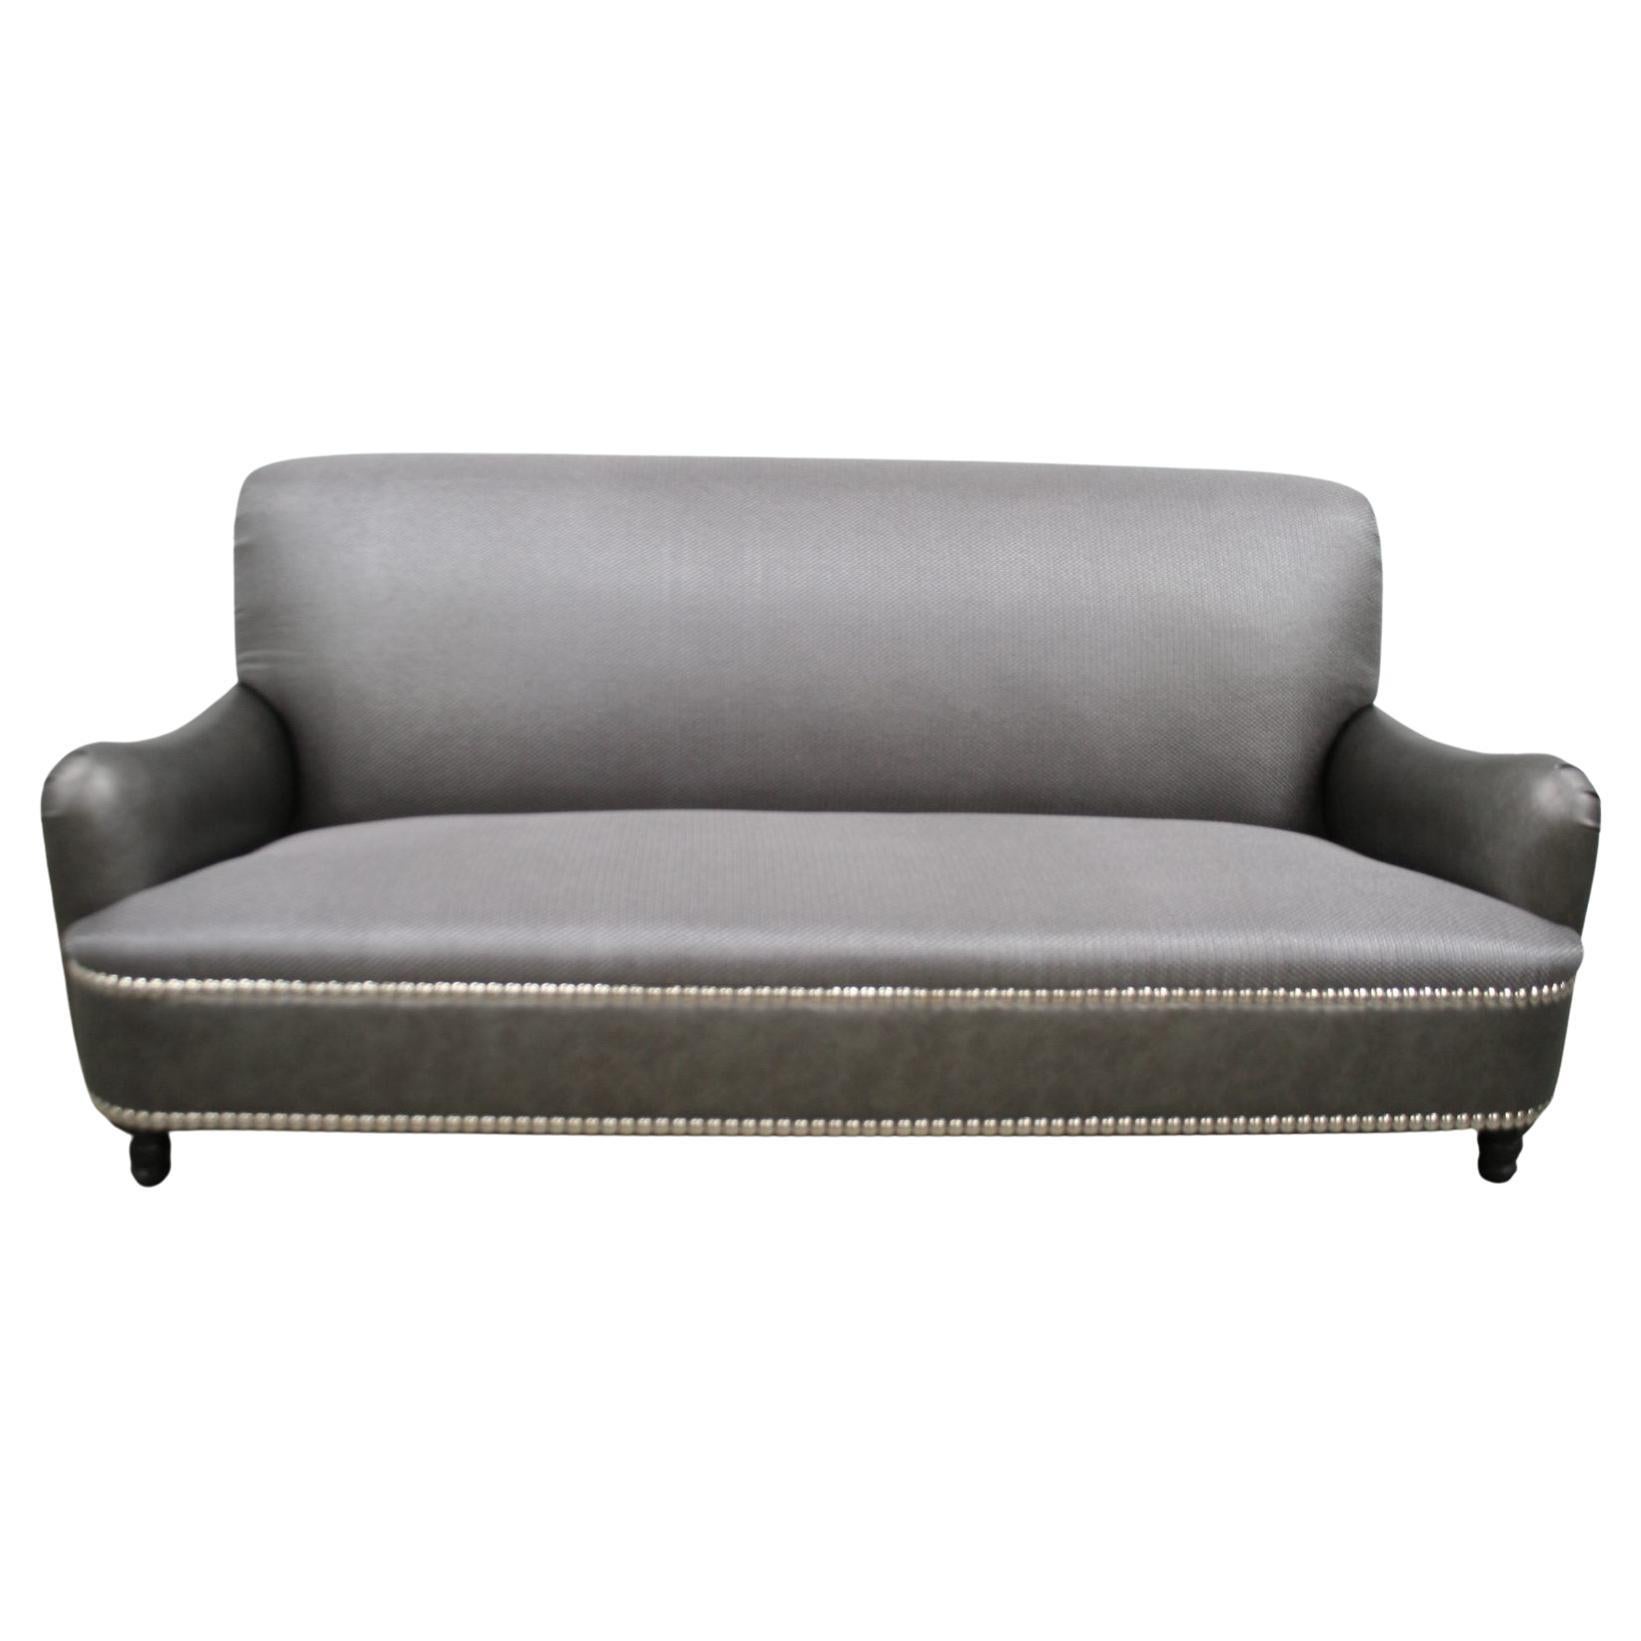 “Jules” Large 2.5-Seat Sofa in Metallic-Weave Romo “Zinc” Fabric For Sale